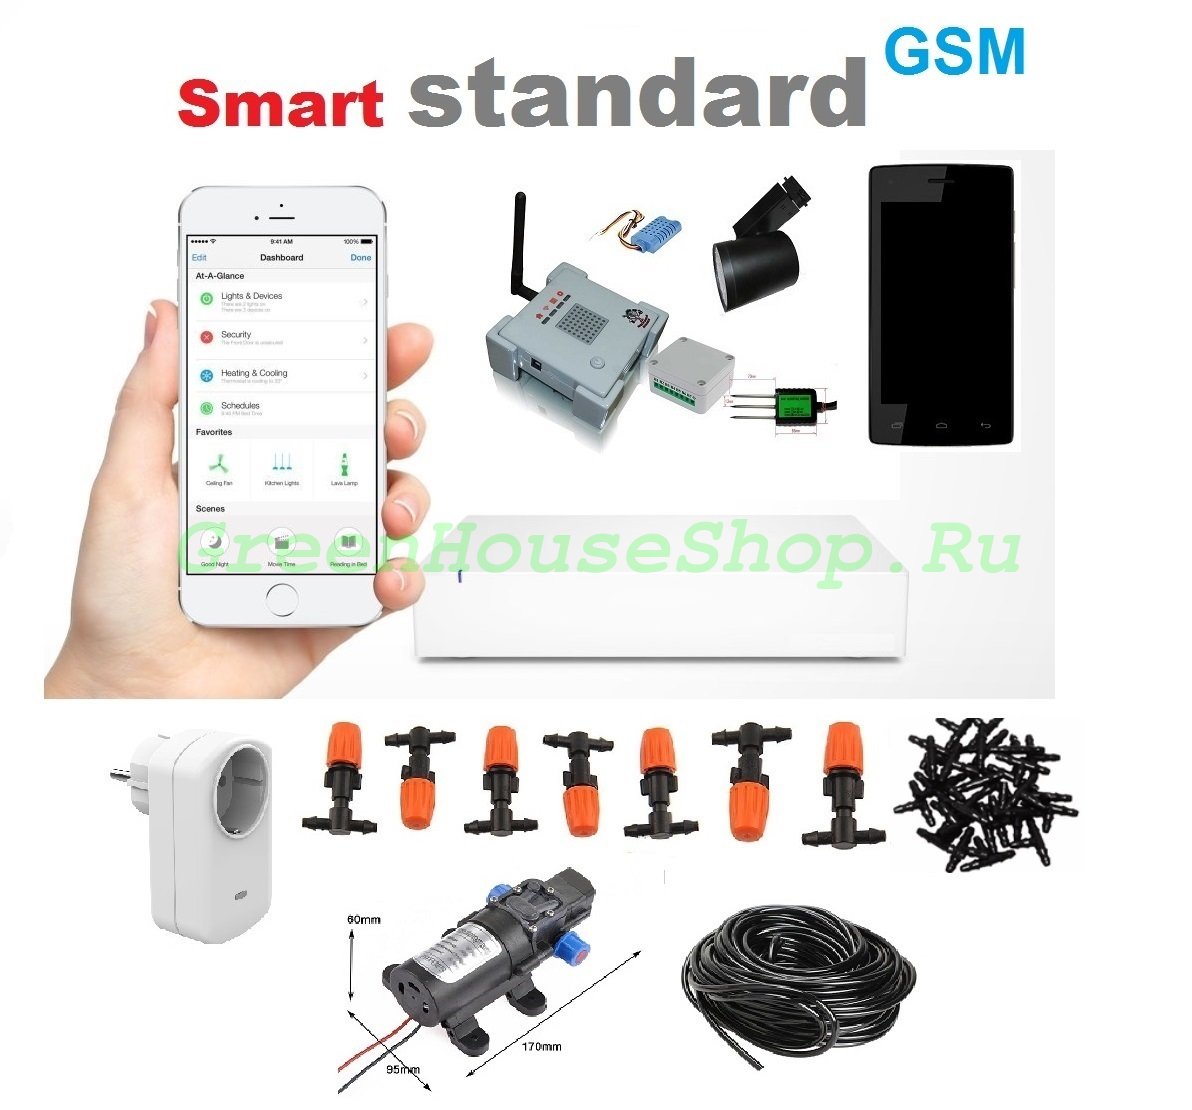 GreenHouseShop_Smart_Standard_GSM 3